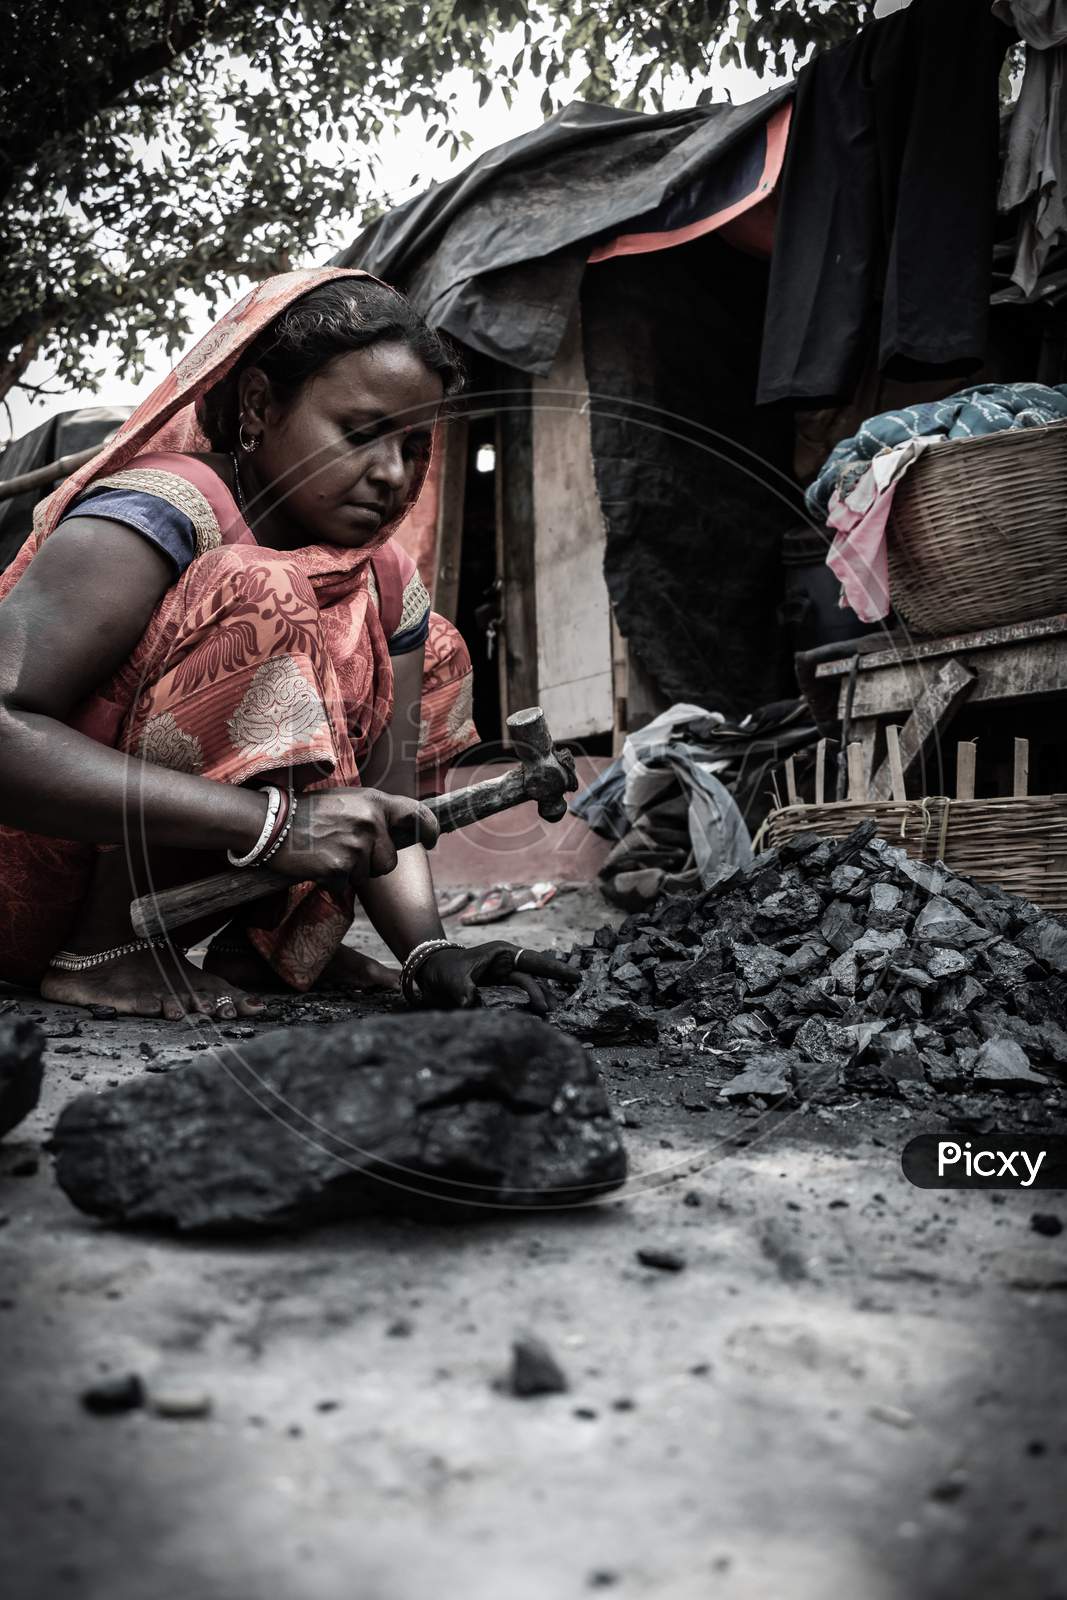 Women breaking coal